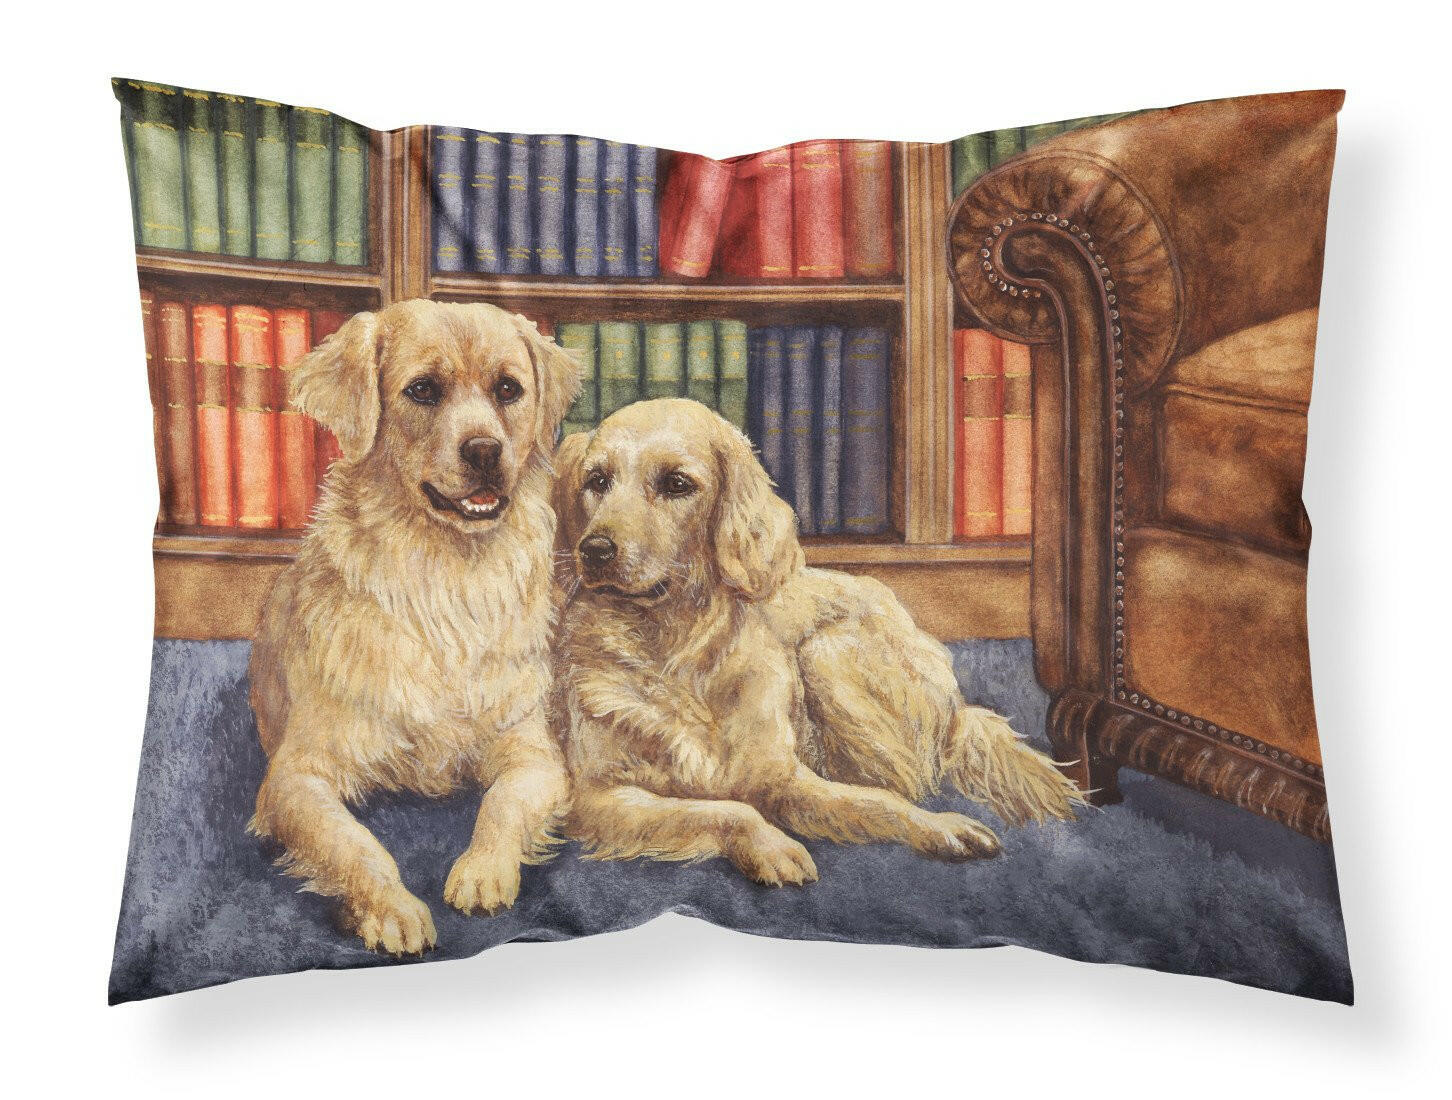 Golden Retrievers in the Library Fabric Standard Pillowcase BDBA0289PILLOWCASE by Caroline's Treasures